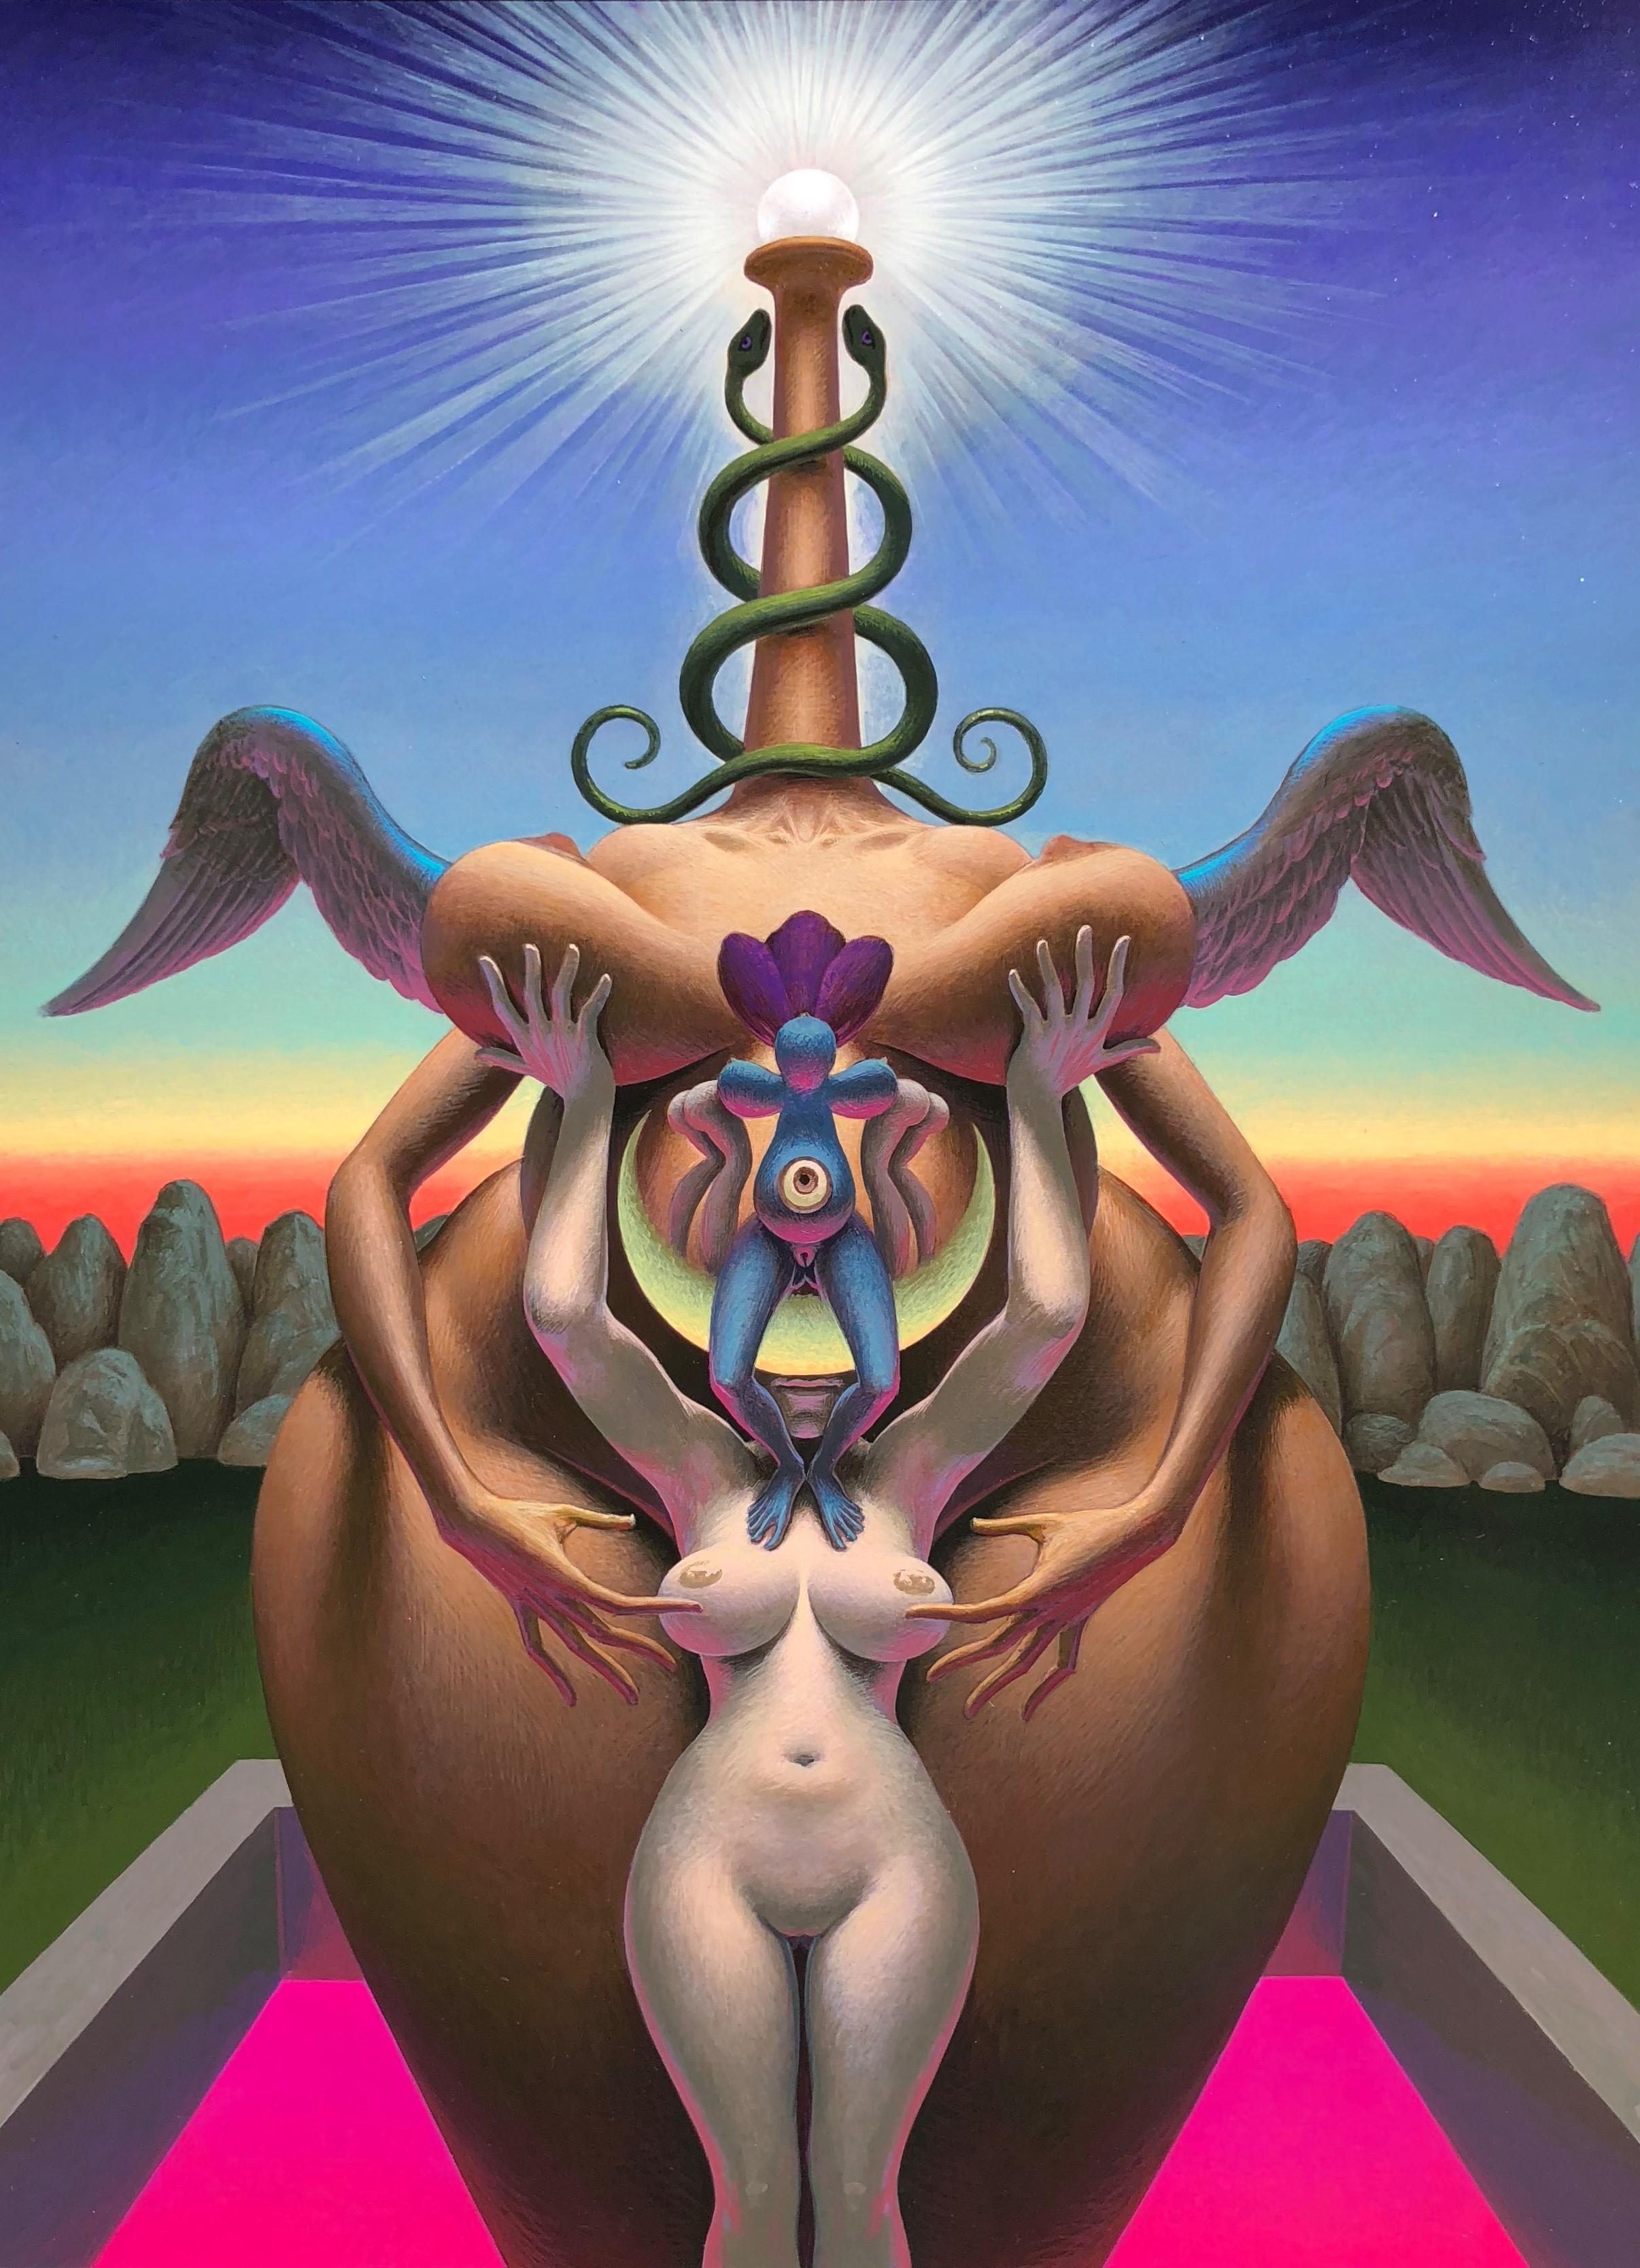 Oliver Hazard Benson Nude Painting - Return of the Goddess - Original Painting of Surreal, Symbolic Goddess Figure